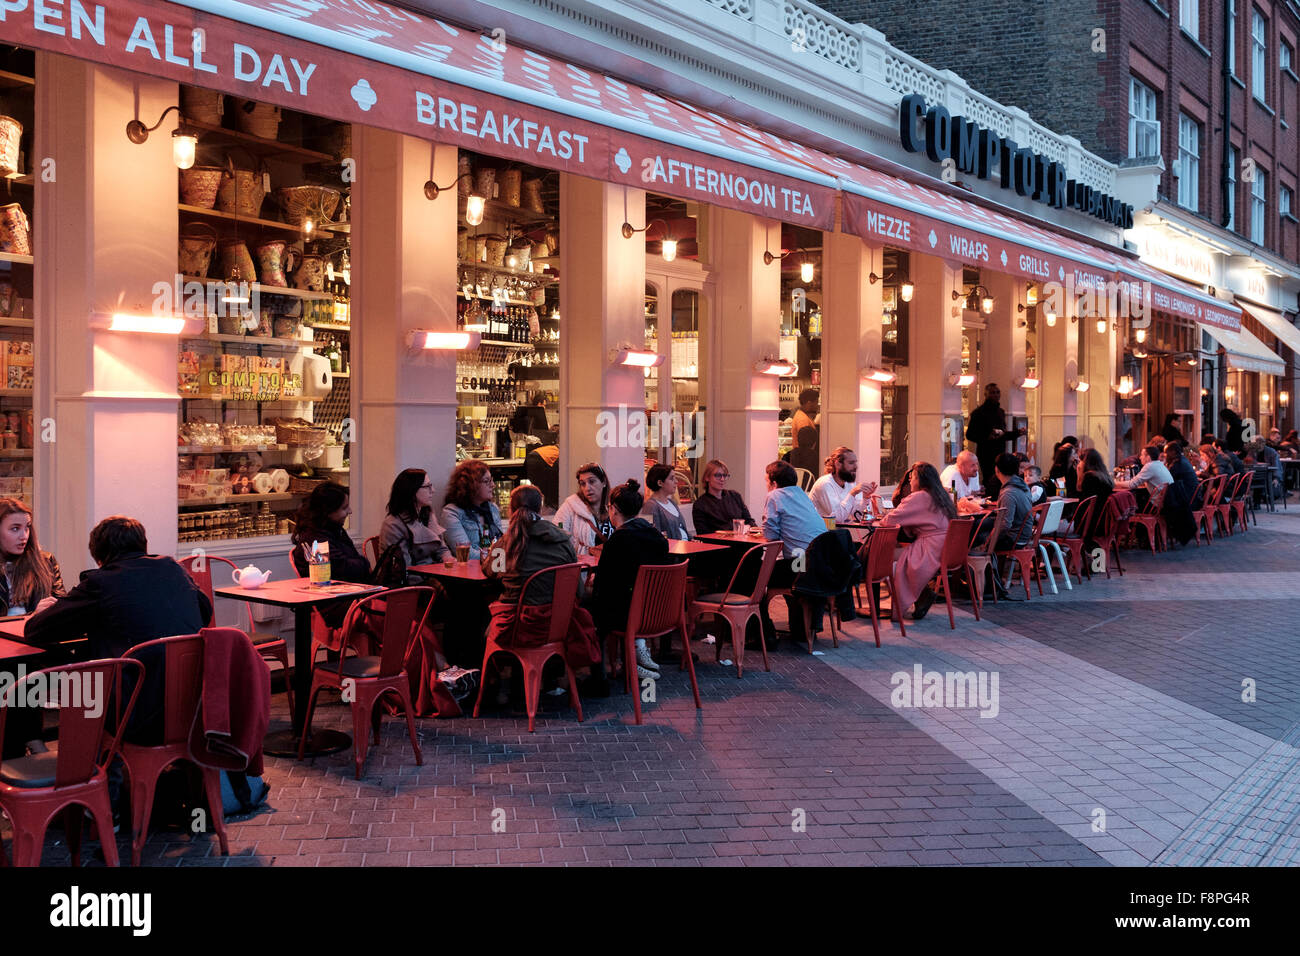 Café im Freien auf Ausstellung Road, South Kensington, London, UK Stockfoto